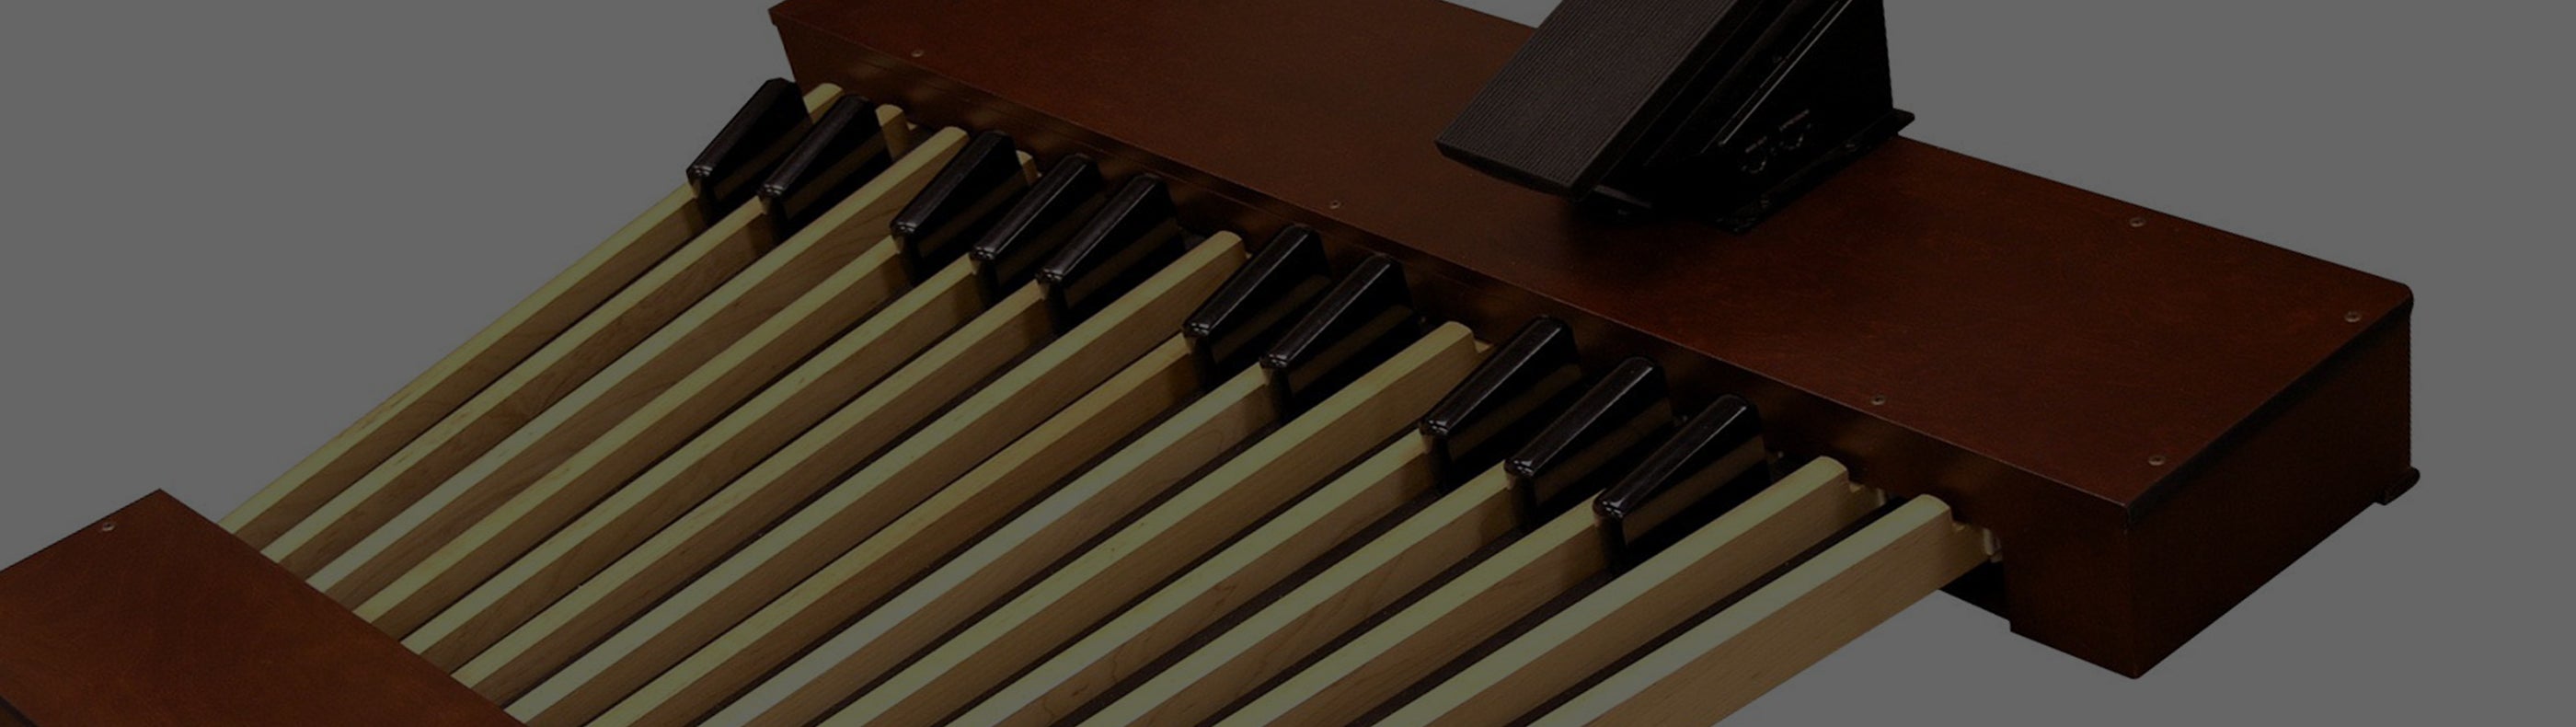 Hammond Organ Pedal Boards